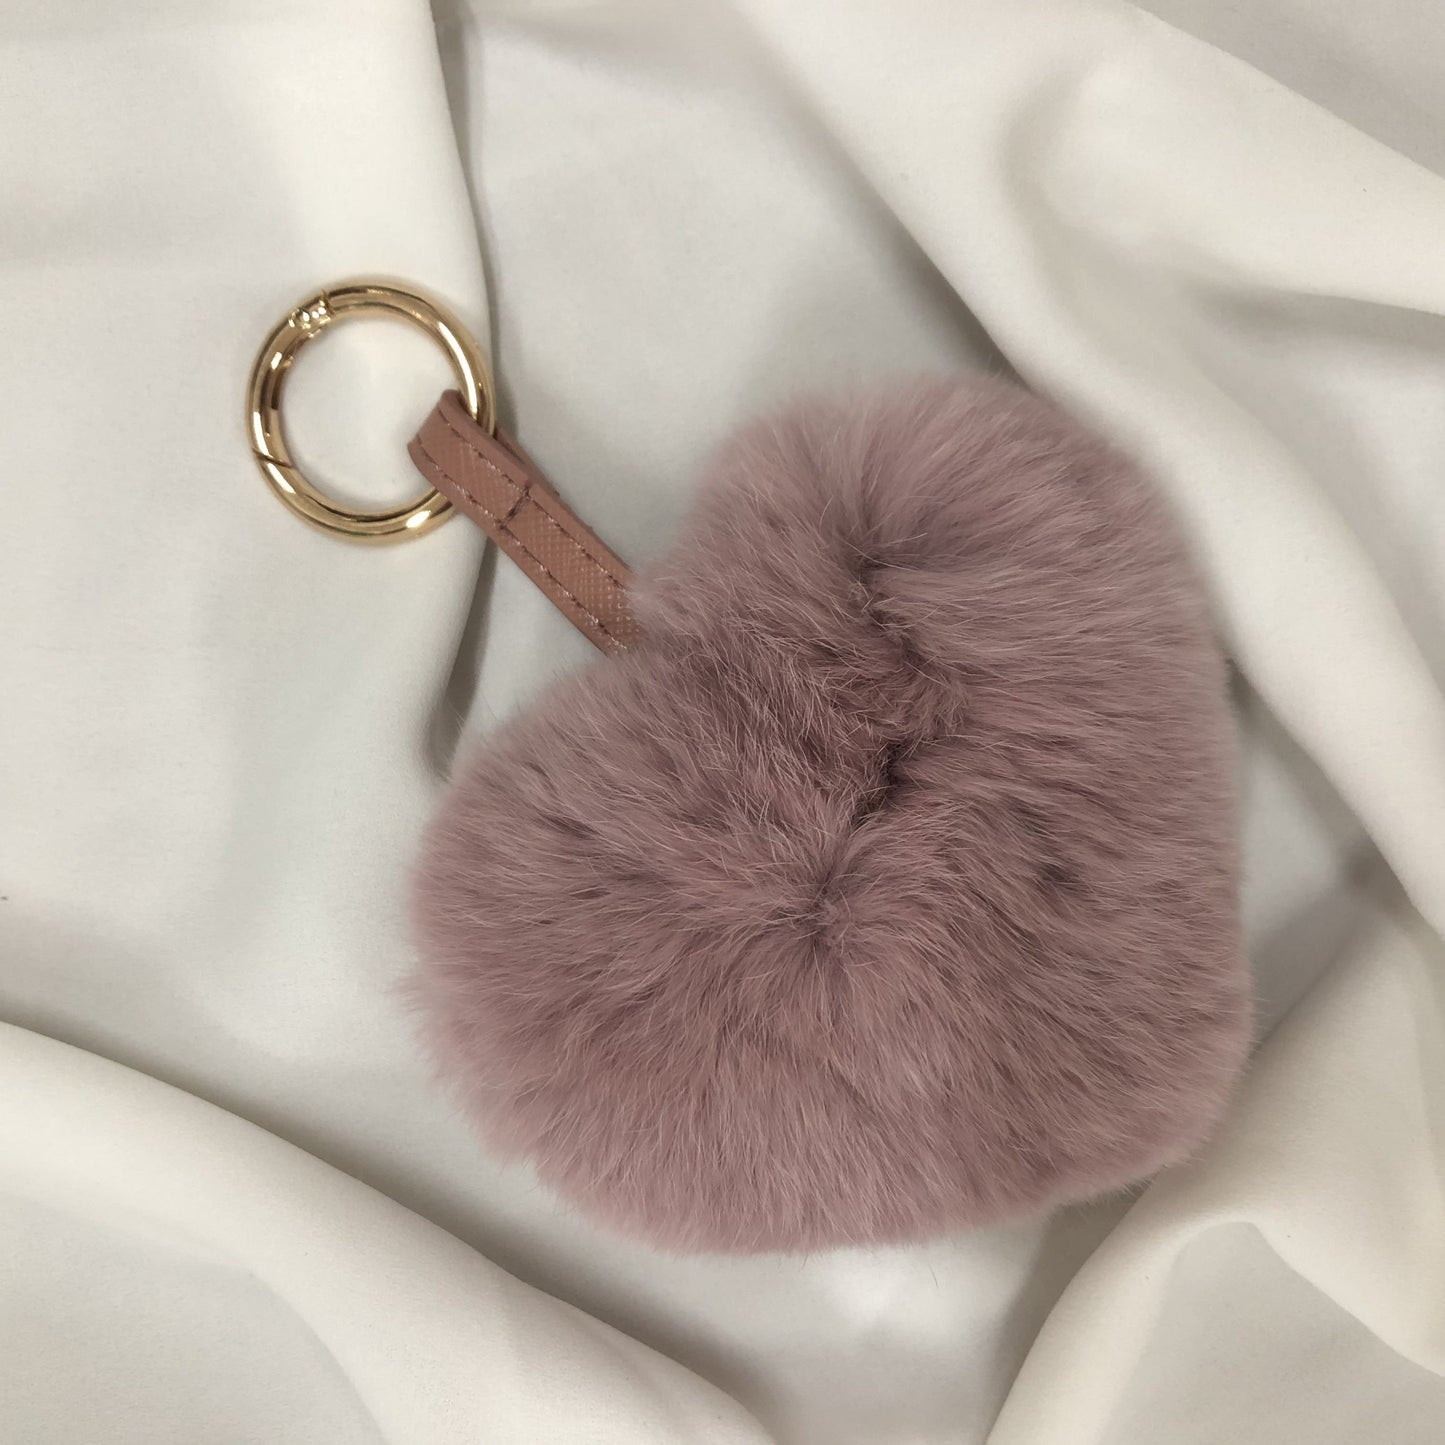 Heart Shape fur ball bag charm by Tomorrow Closet